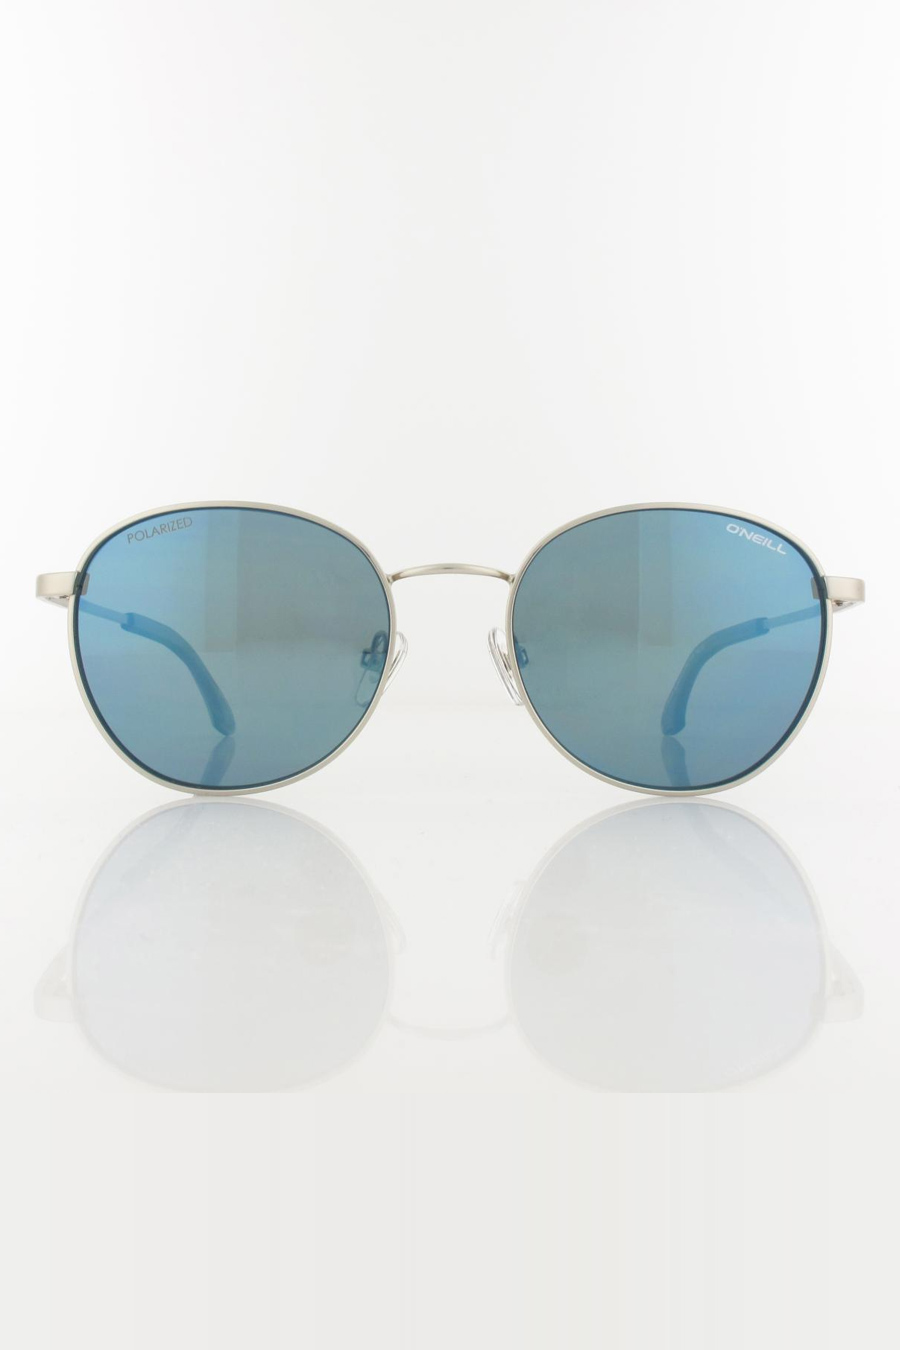 Sunglasses ONEILL ONS-9013-20-002P